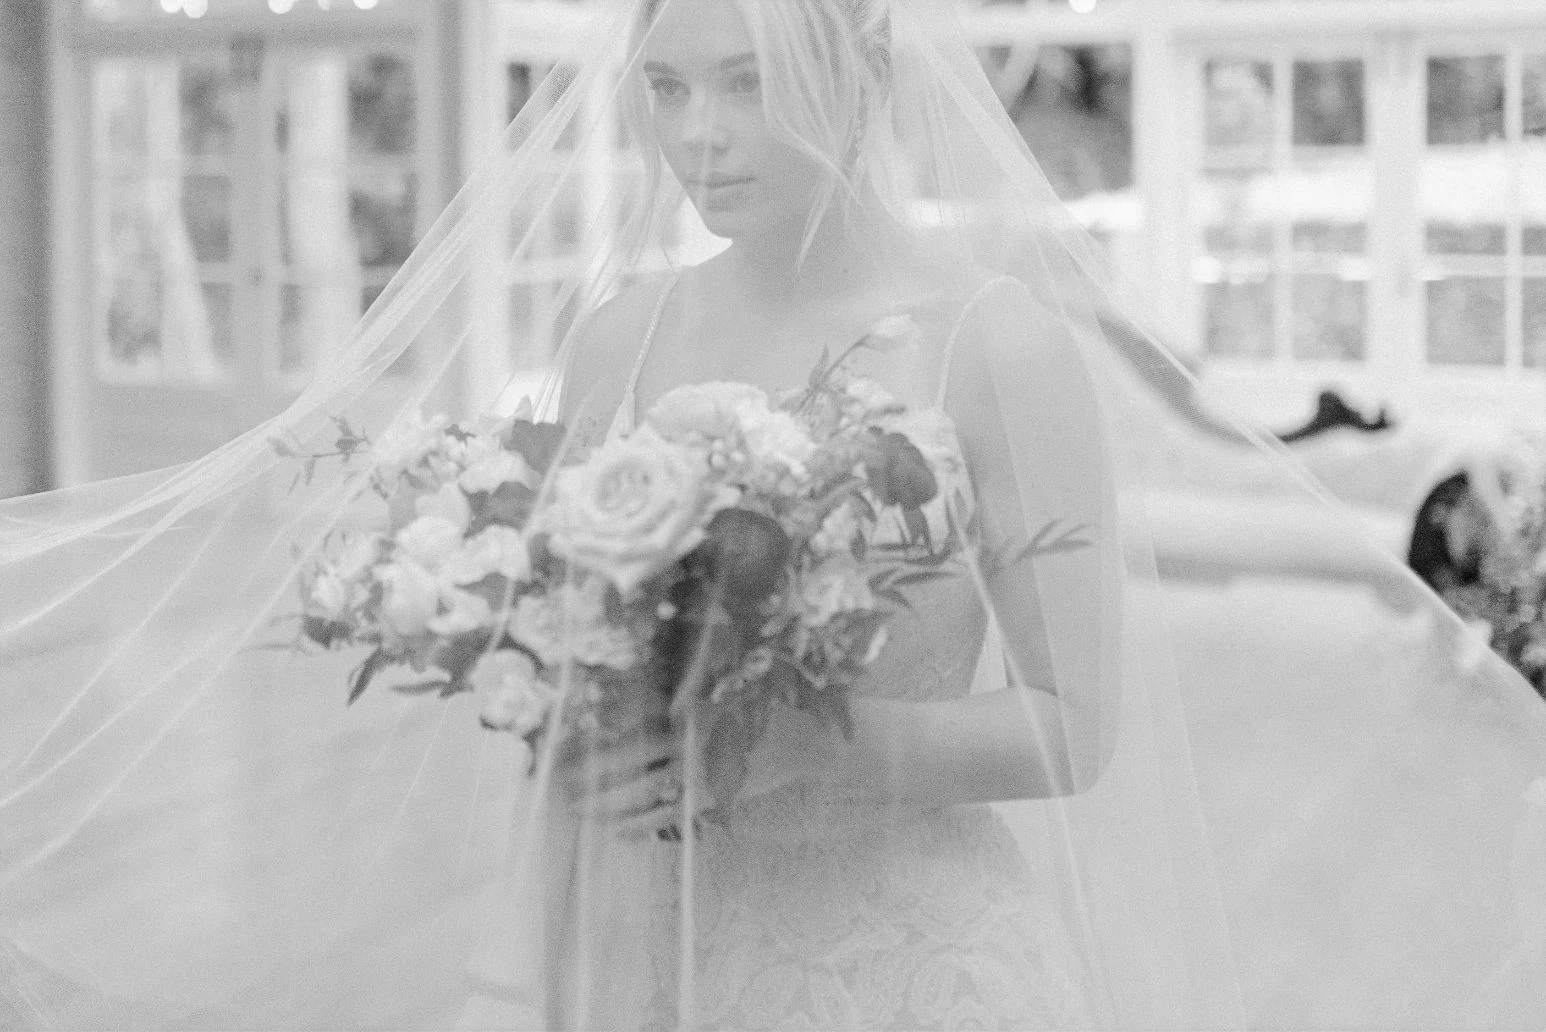 lauren olivia photography toowoomba weddings gabbinbar homestead bridal gowns accessories venue floral design stationery